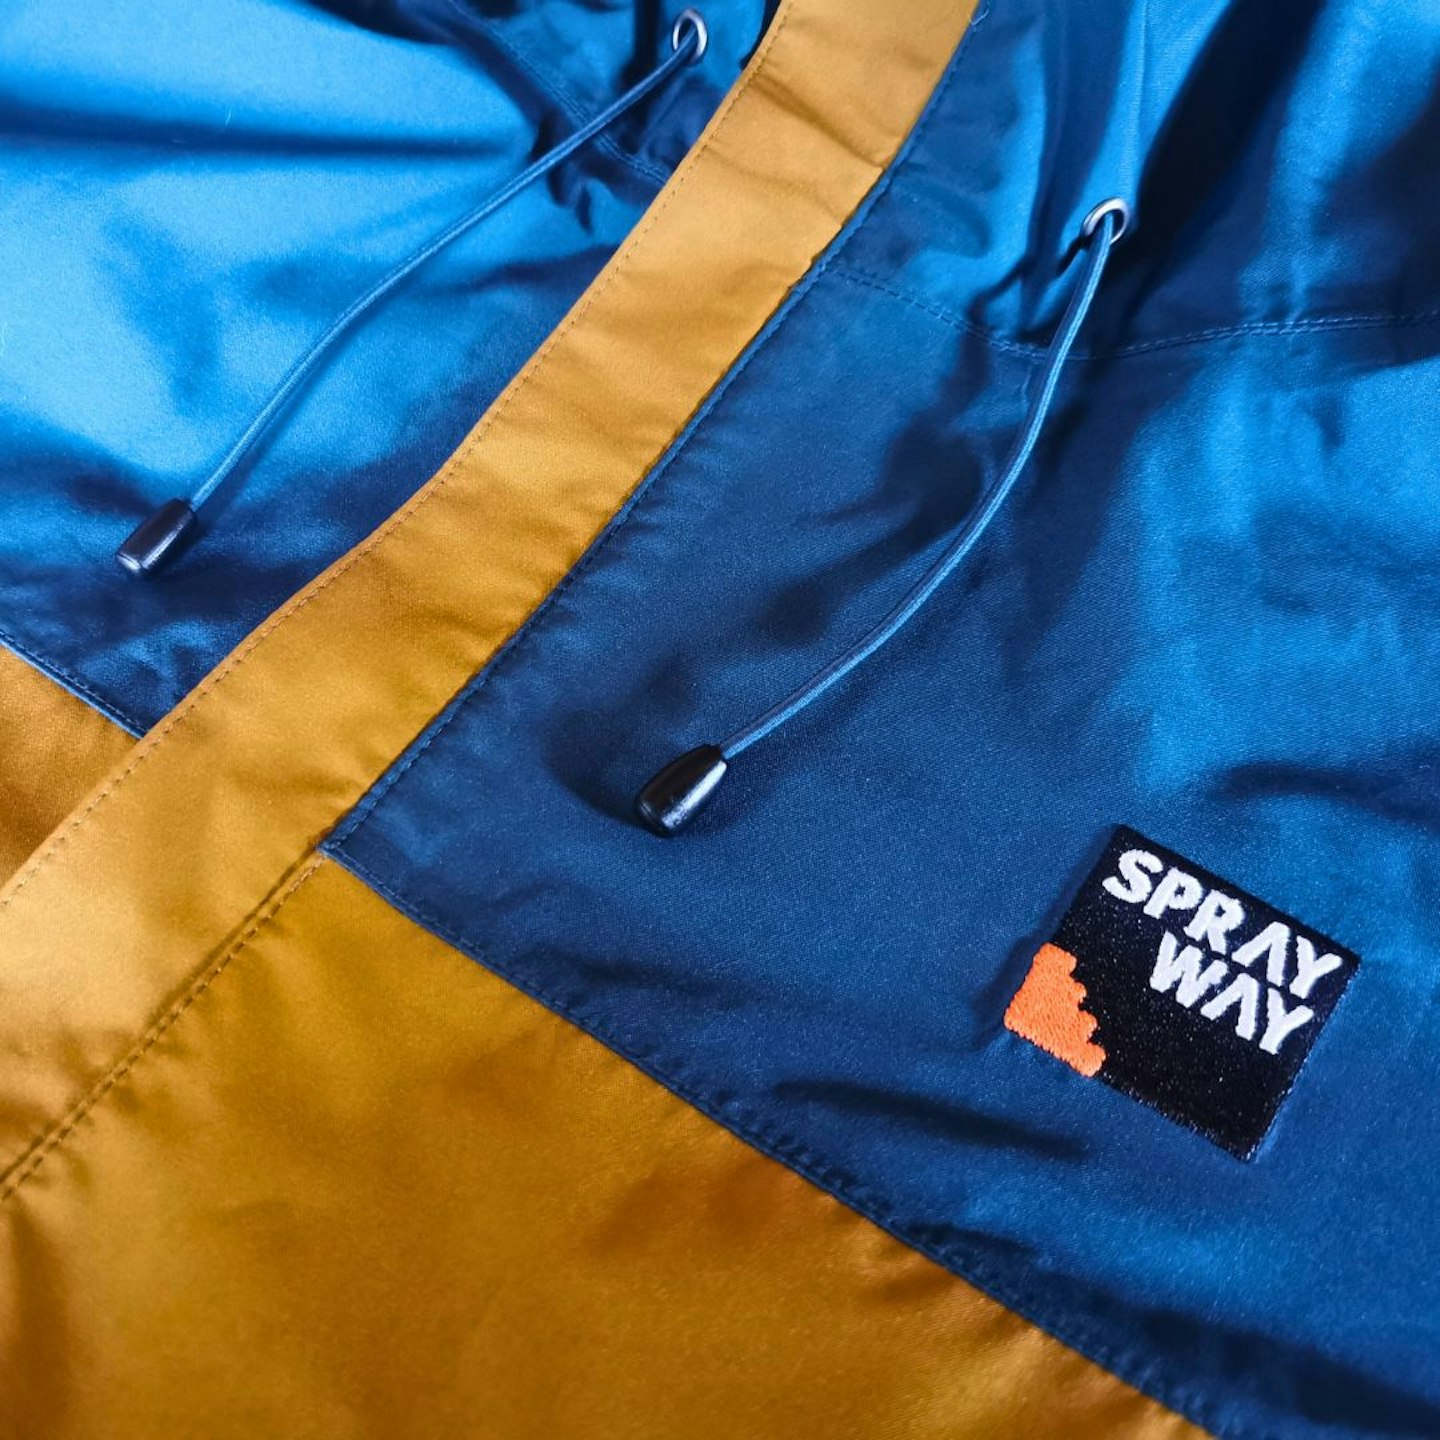 Sprayway cape wrath jacket front panel